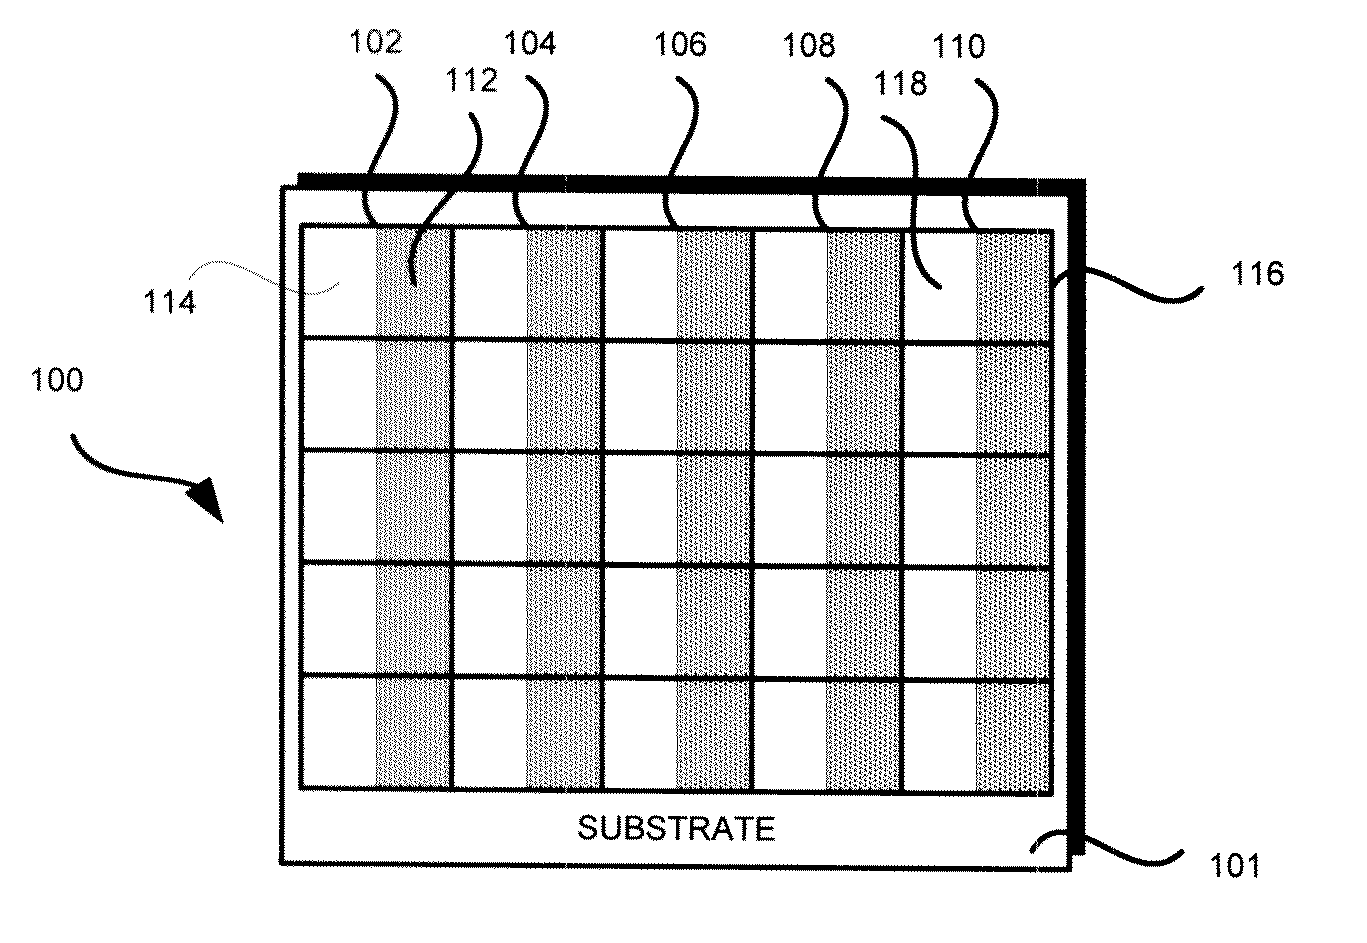 Alternating row infrared filter for an image sensor